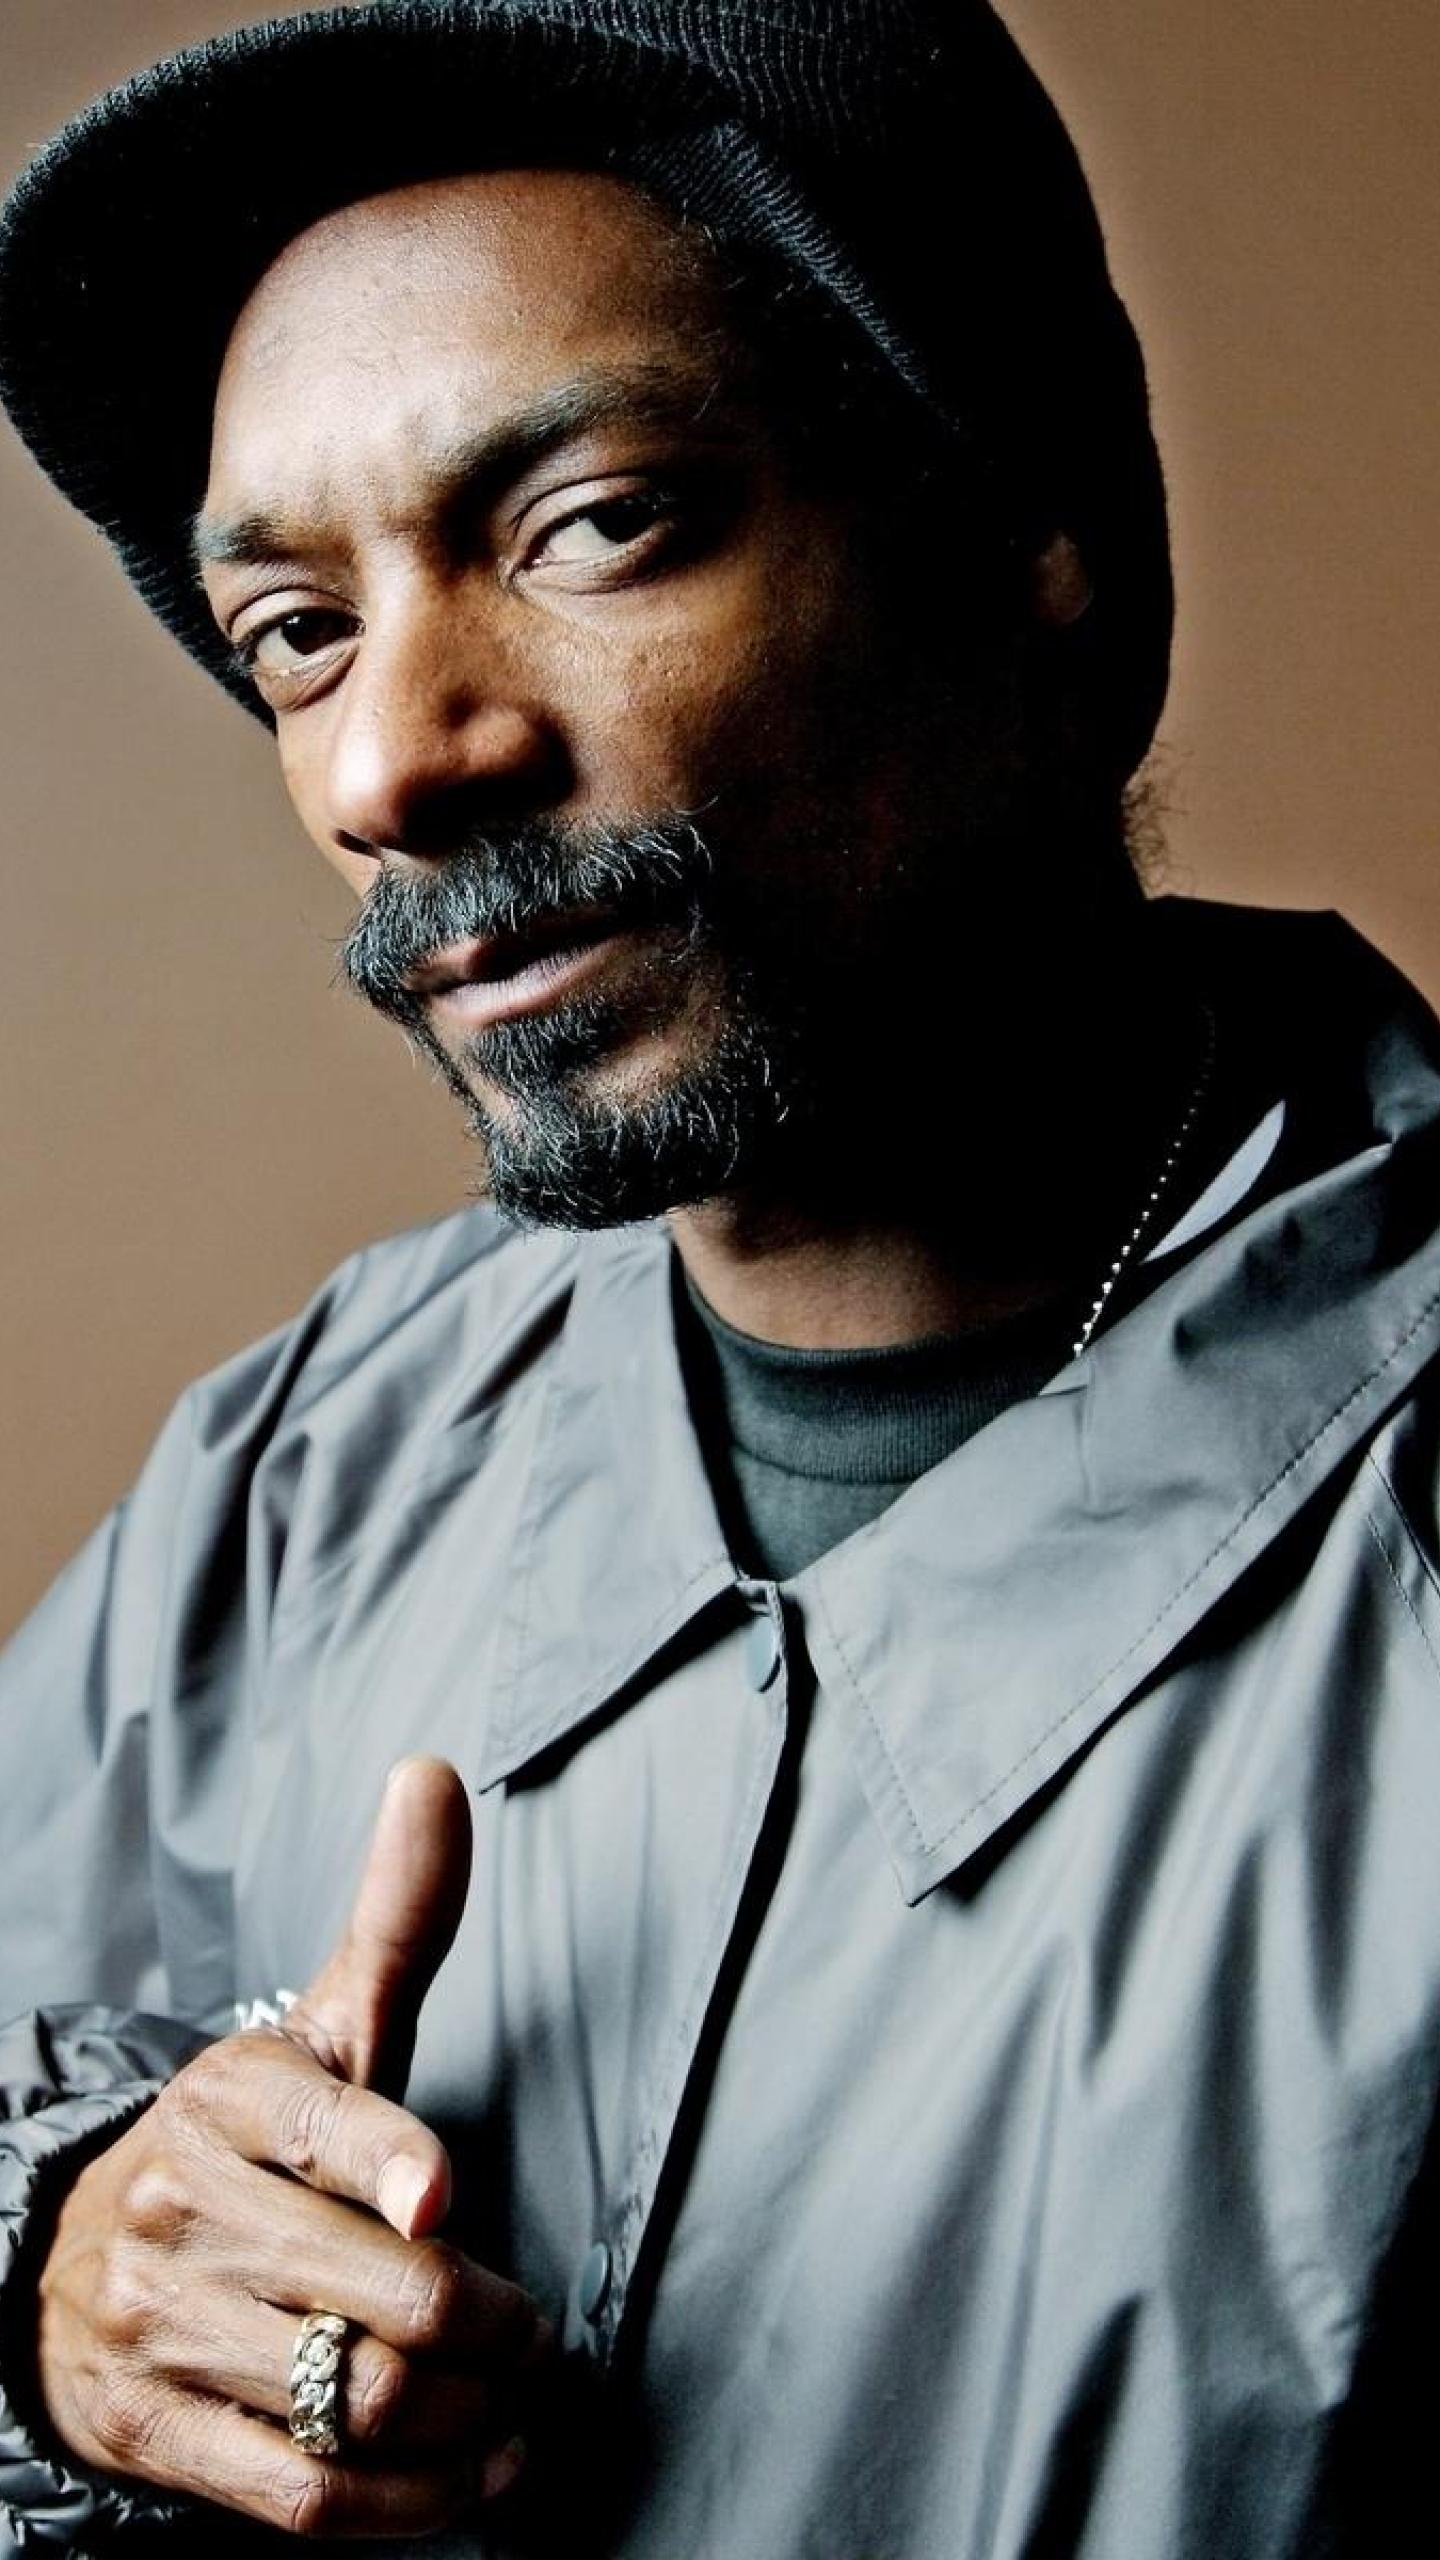 Snoop Dogg Wallpaper Pc - Snoop Dogg - HD Wallpaper 